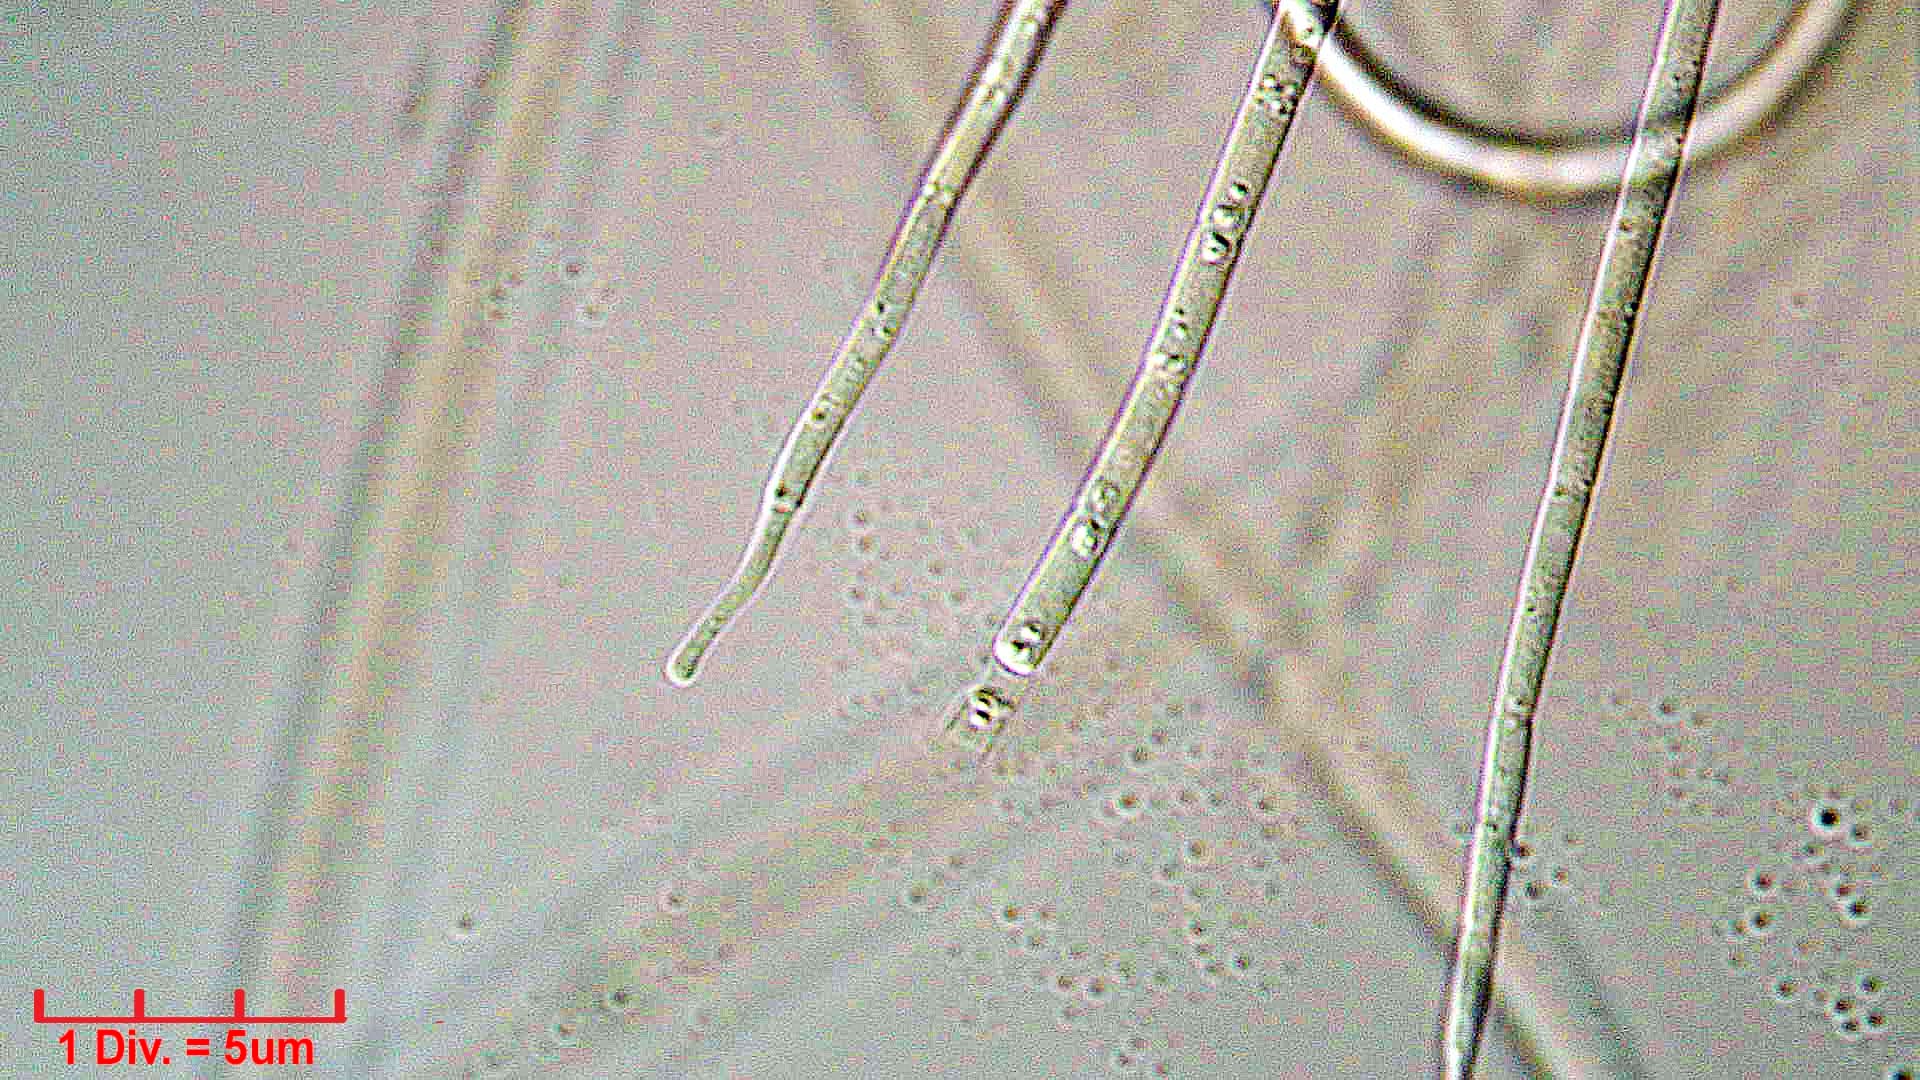 Cyanobacteria/Oscillatoriales/Coleofasciculaceae/Geitlerinema/splendidum/geitlerinema-splendidum-294.jpg